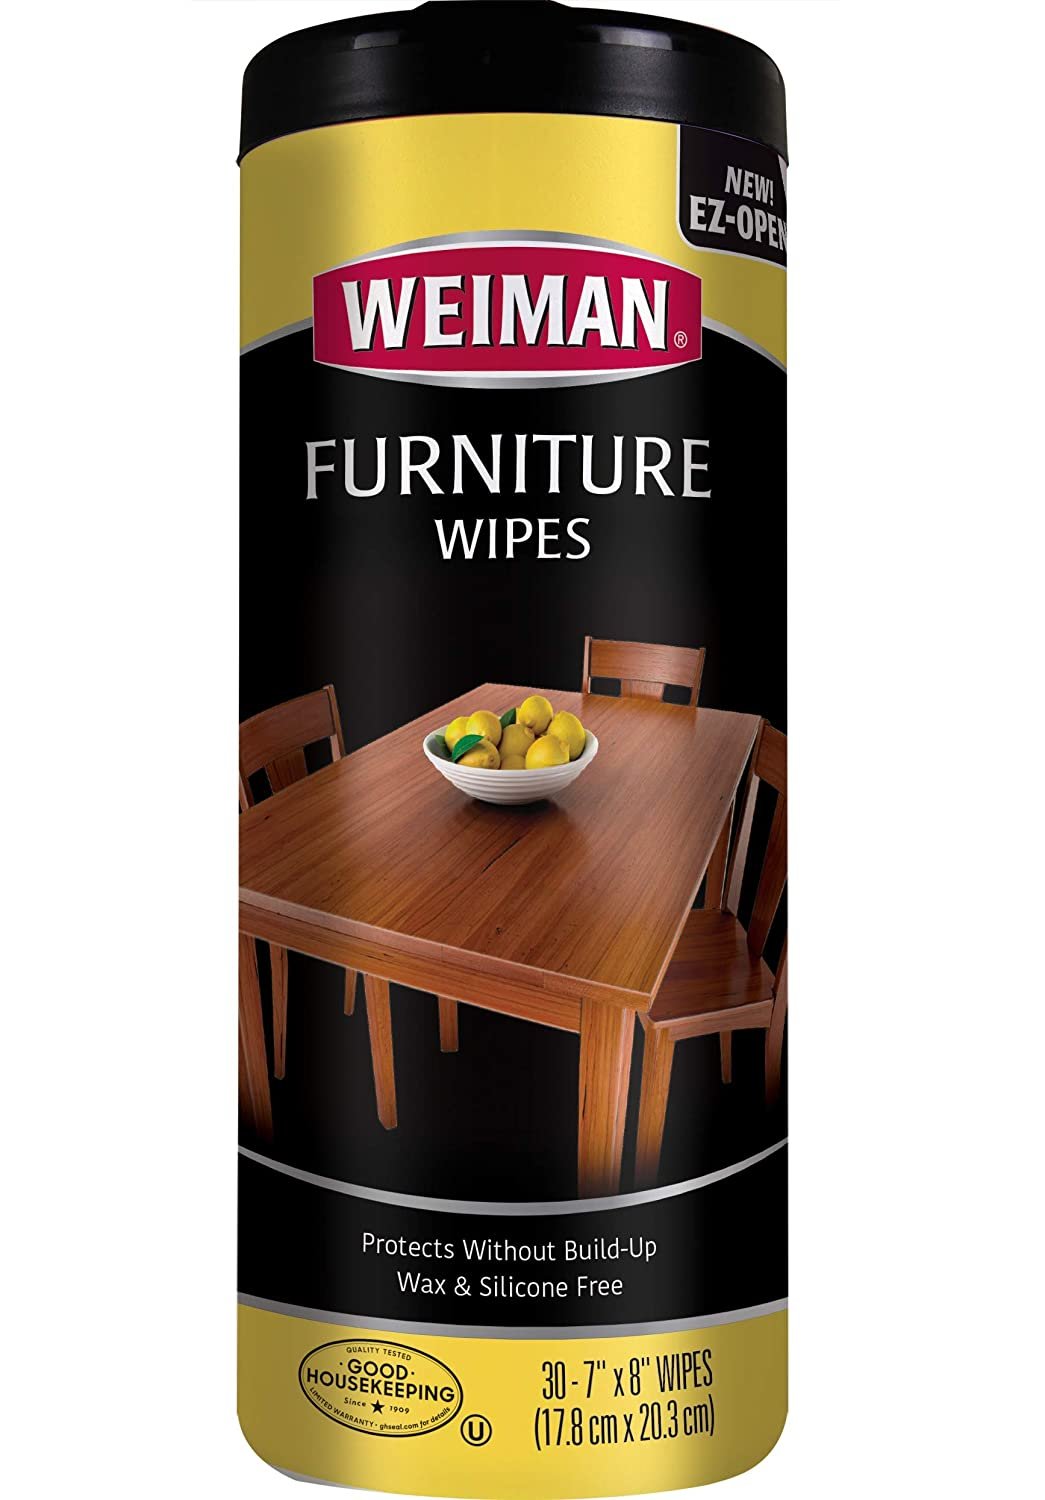 Weiman Furniture Wipes